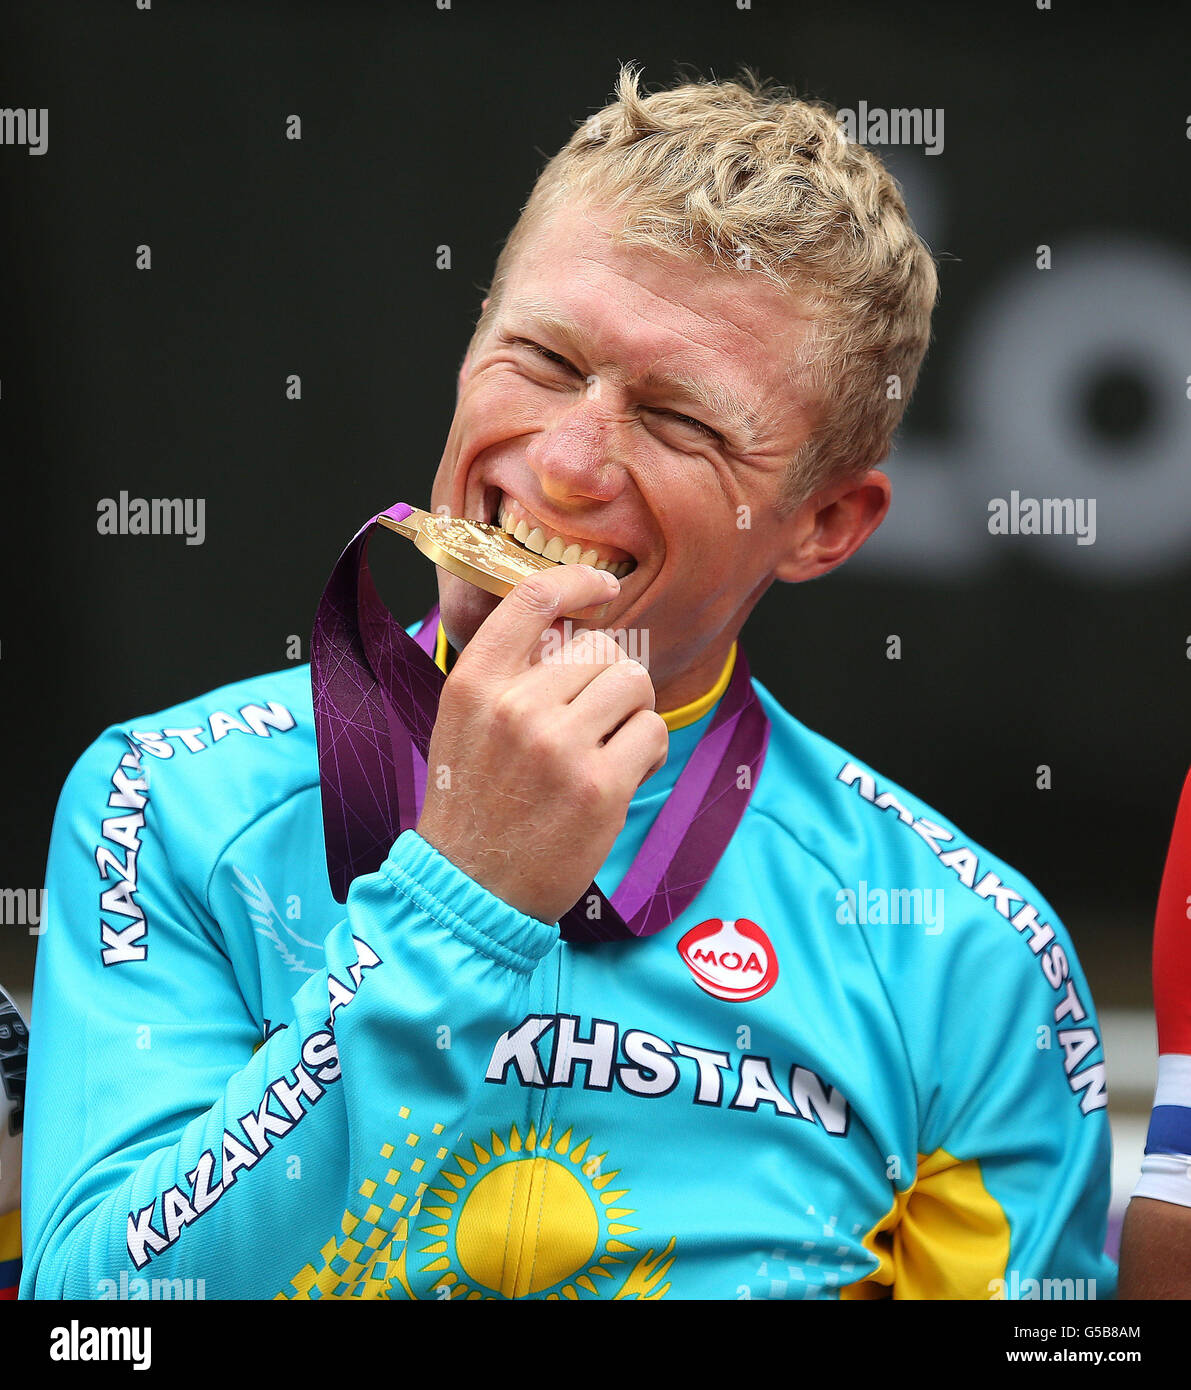 Kazakstan's Alexandr Vinokurov bites his gold medal after winning the mens Road Race Stock Photo